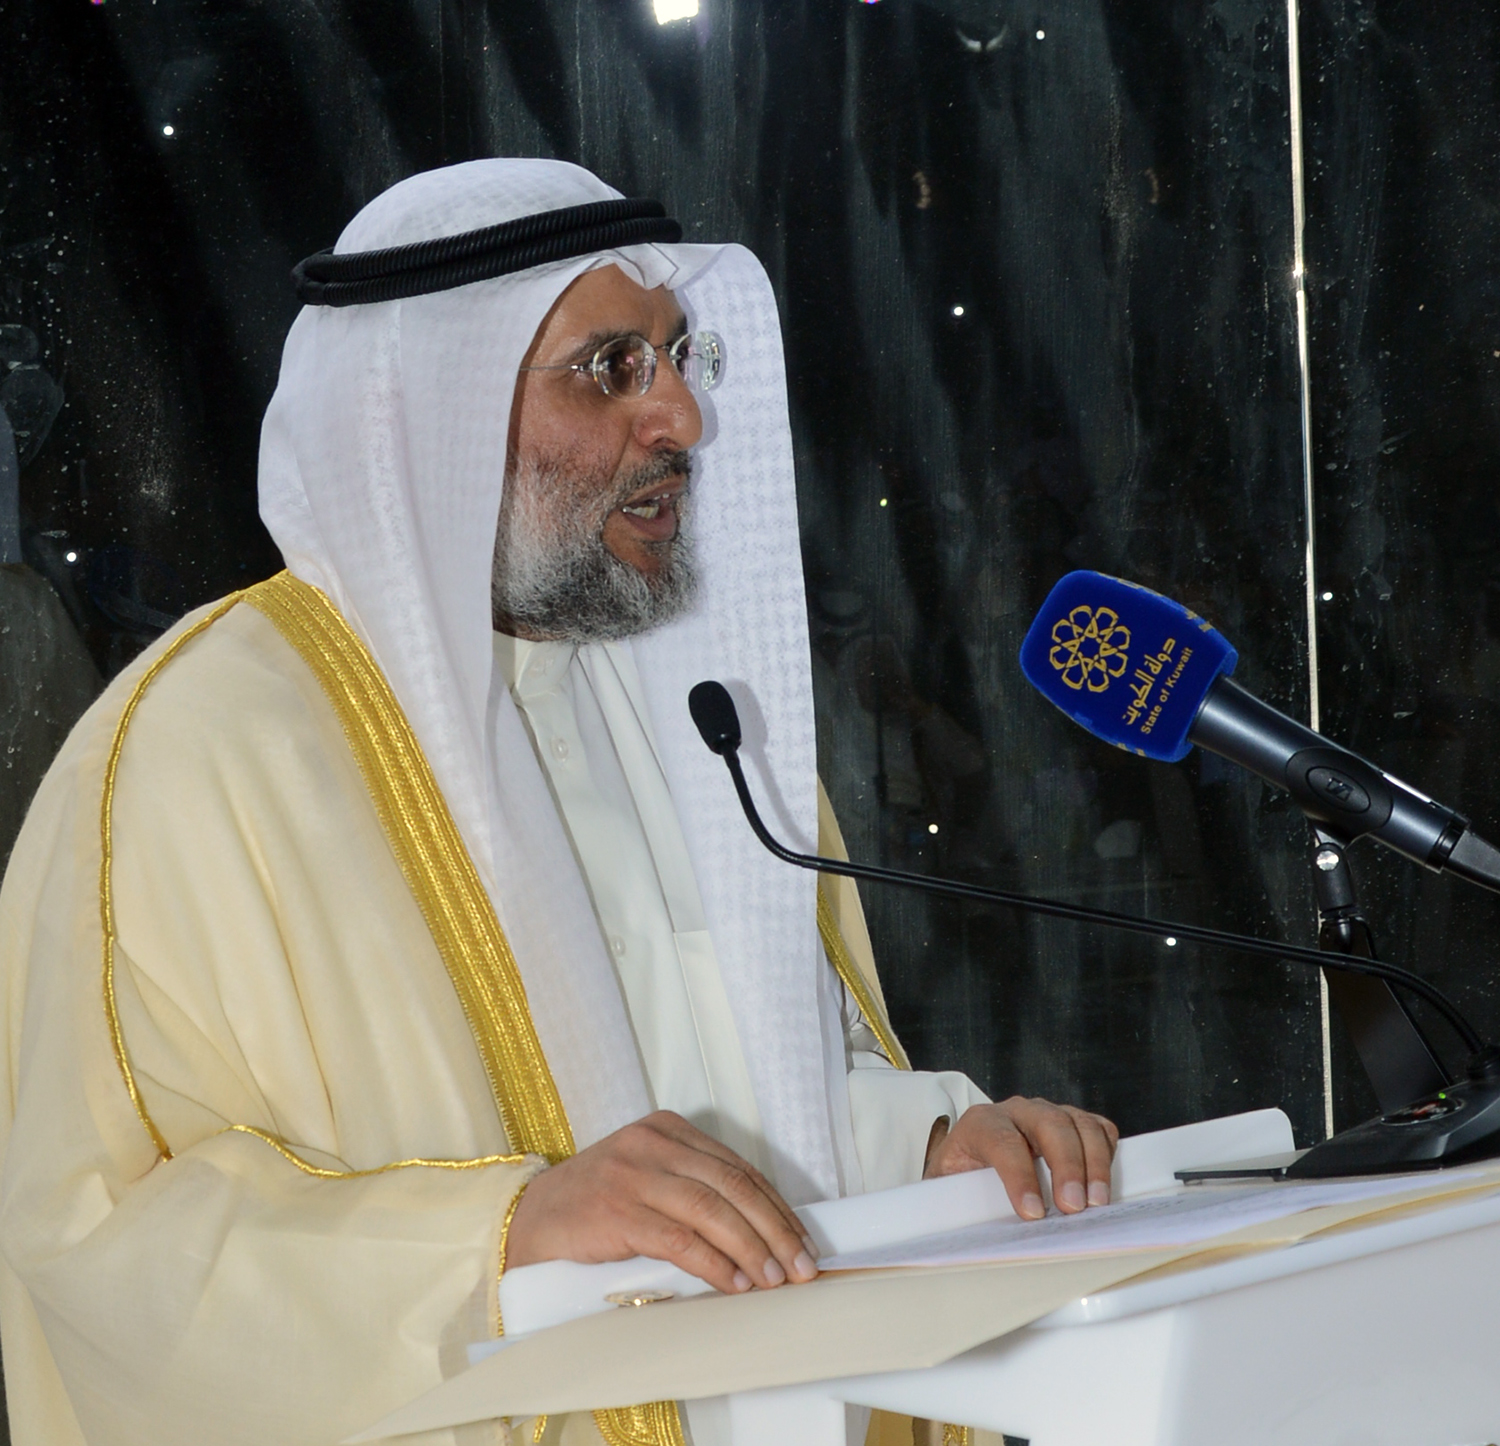 Minister of Public Works Abdulrahman Al-Mutawa